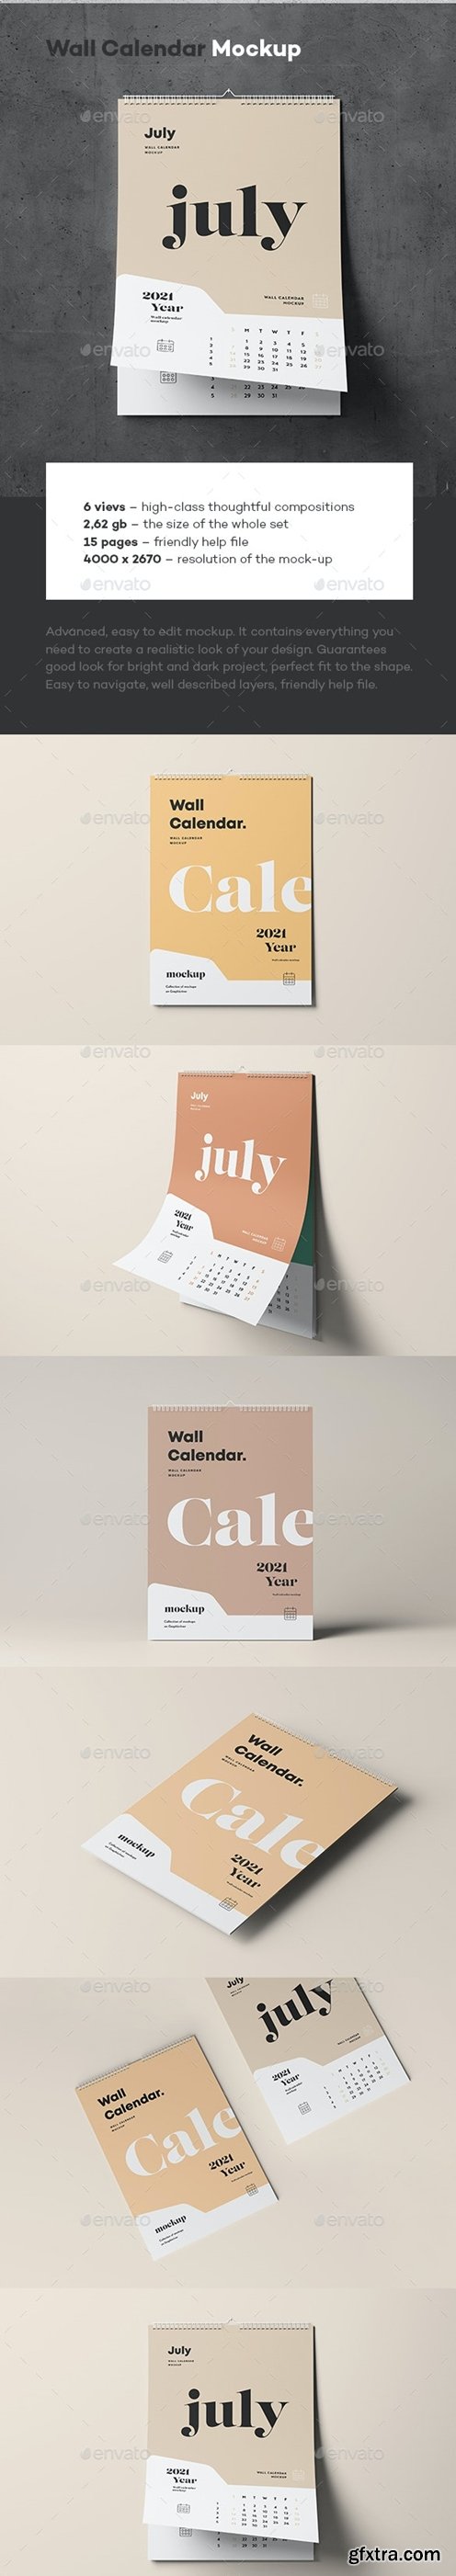 GraphicRiver - Wall Calendar Mock-up 29436808